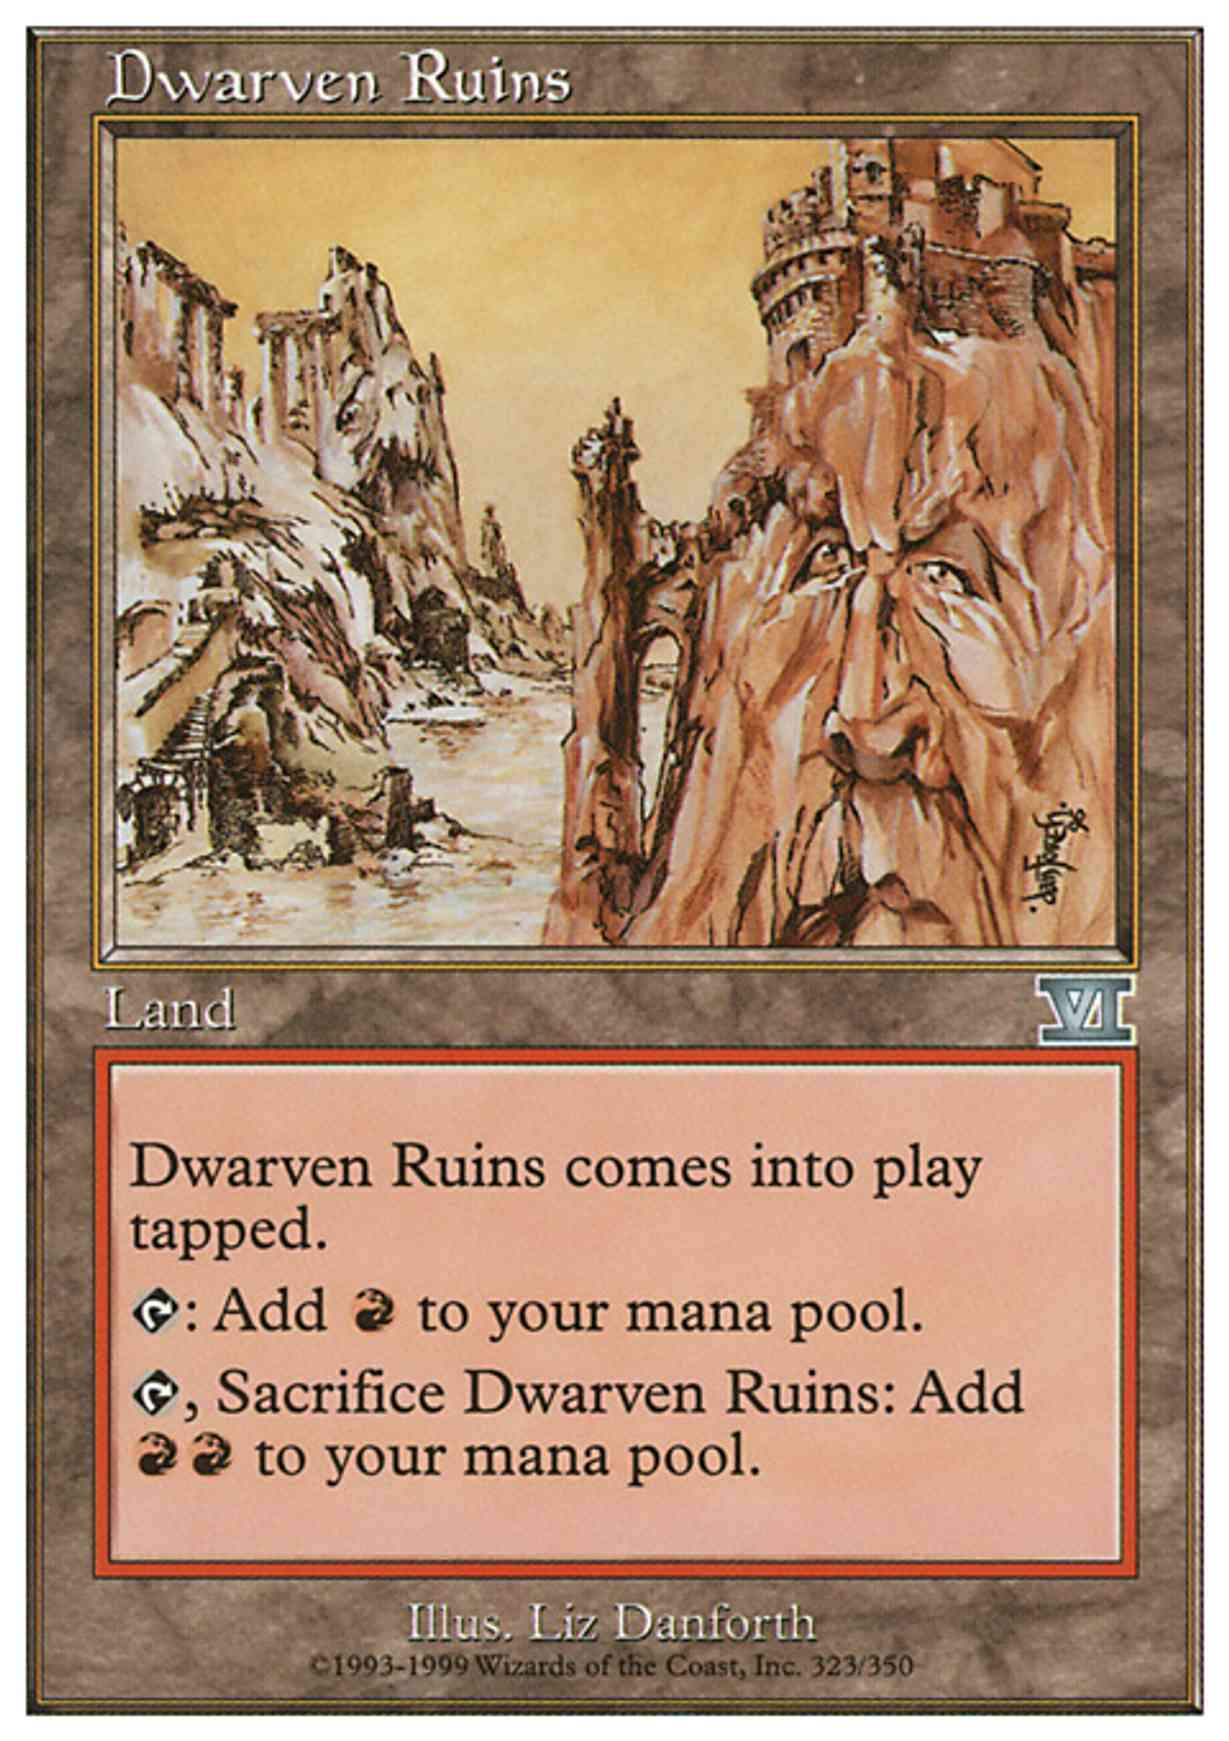 Dwarven Ruins magic card front